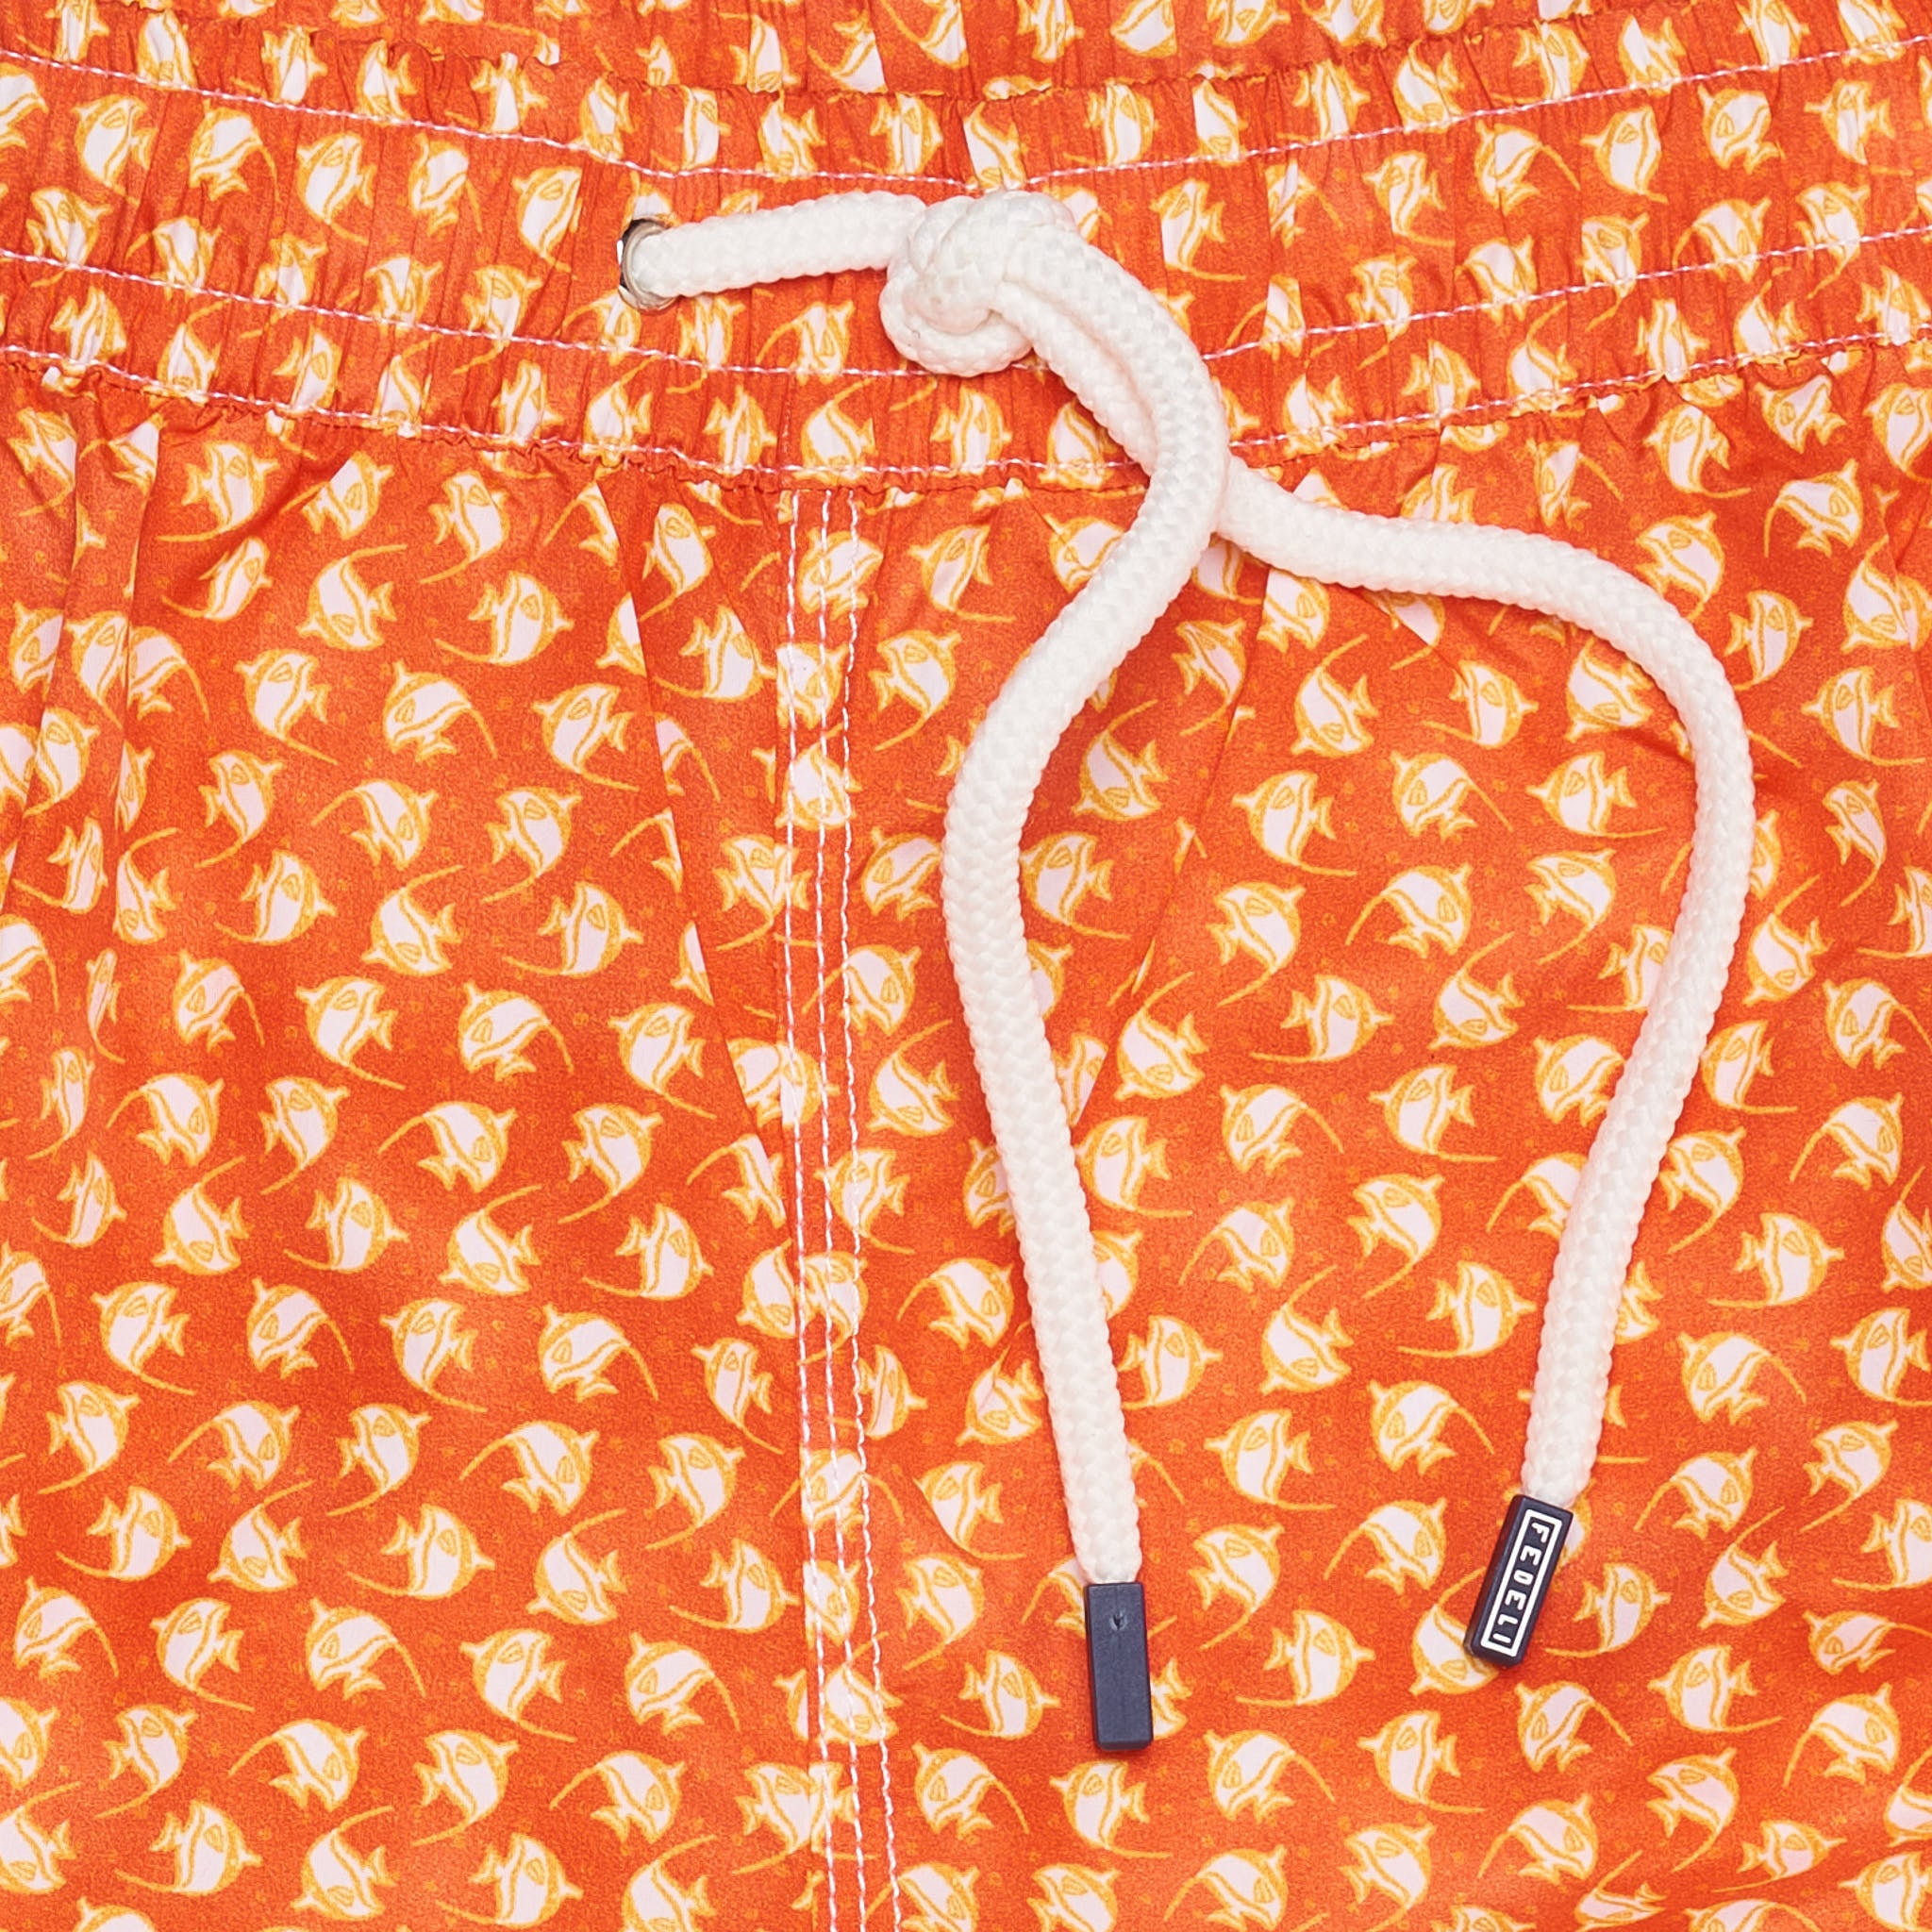 FEDELI Italy Orange Fish Printed Madeira Airstop Swim Shorts Trunks NEW 2XL FEDELI